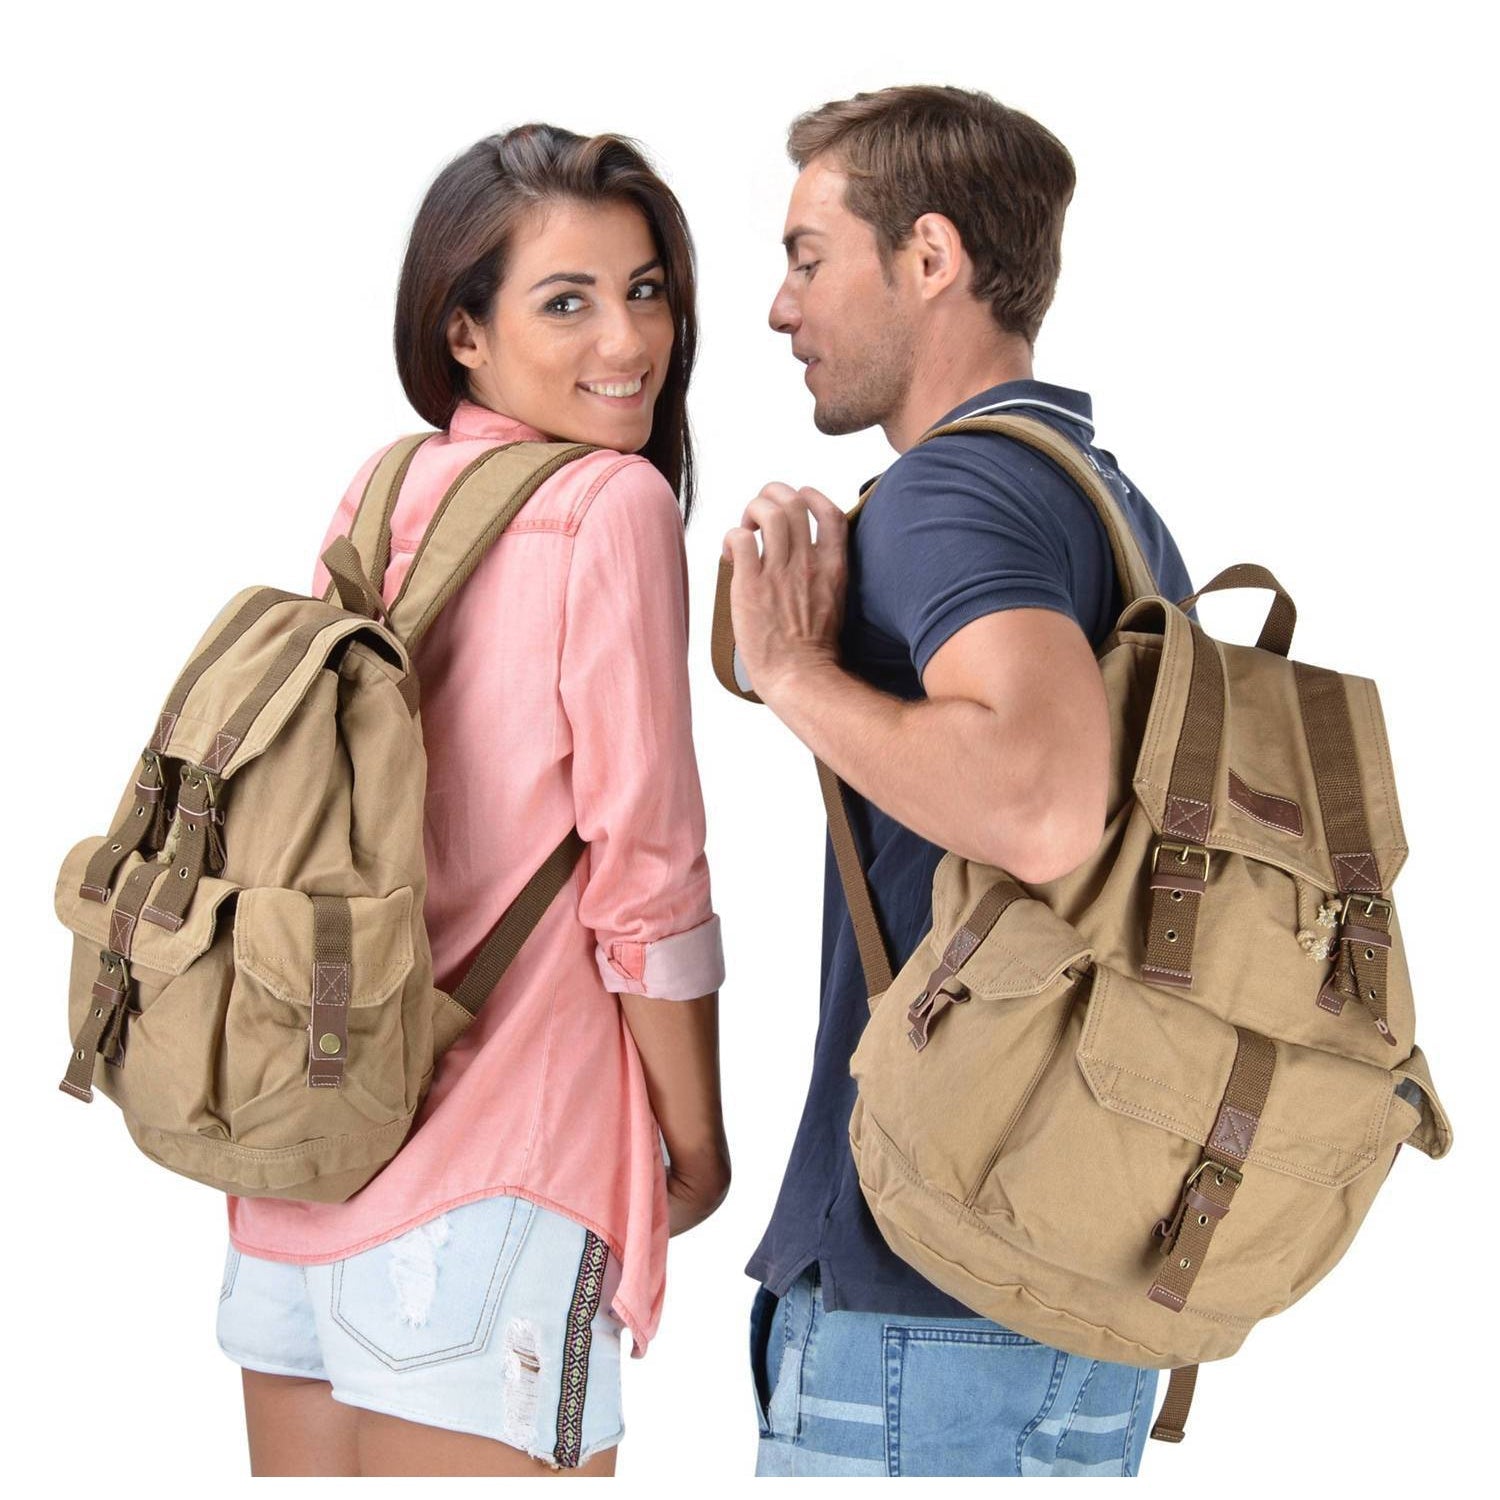 KAMELIS - Plain Canvas Backpack